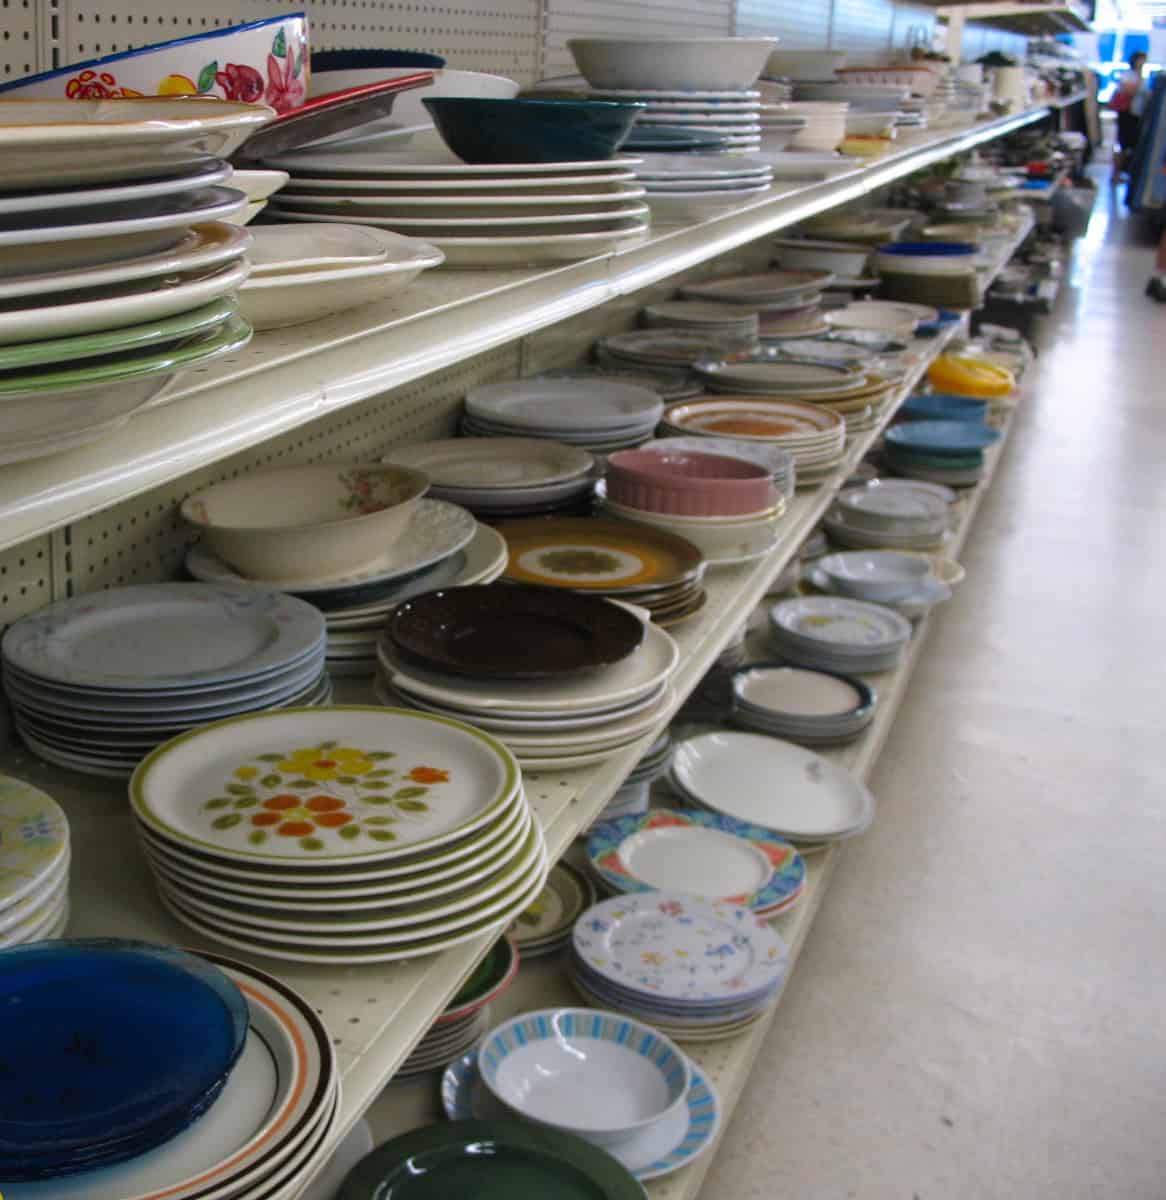 housewares and plates in a Cincinnati thrift shop